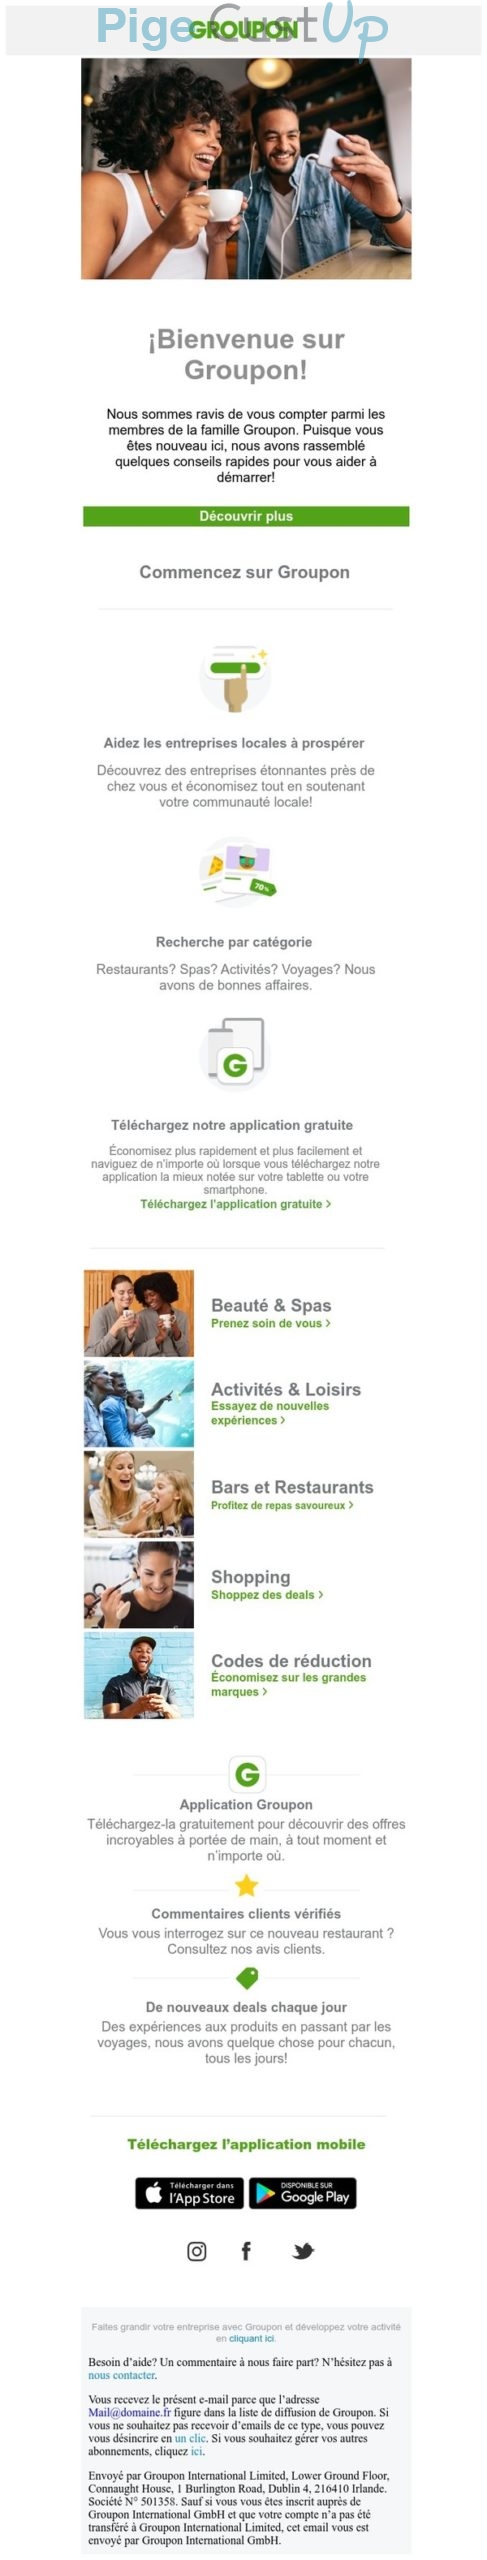 Exemple de Type de media  e-mailing - Groupon - Marketing relationnel - Bienvenue - Welcome